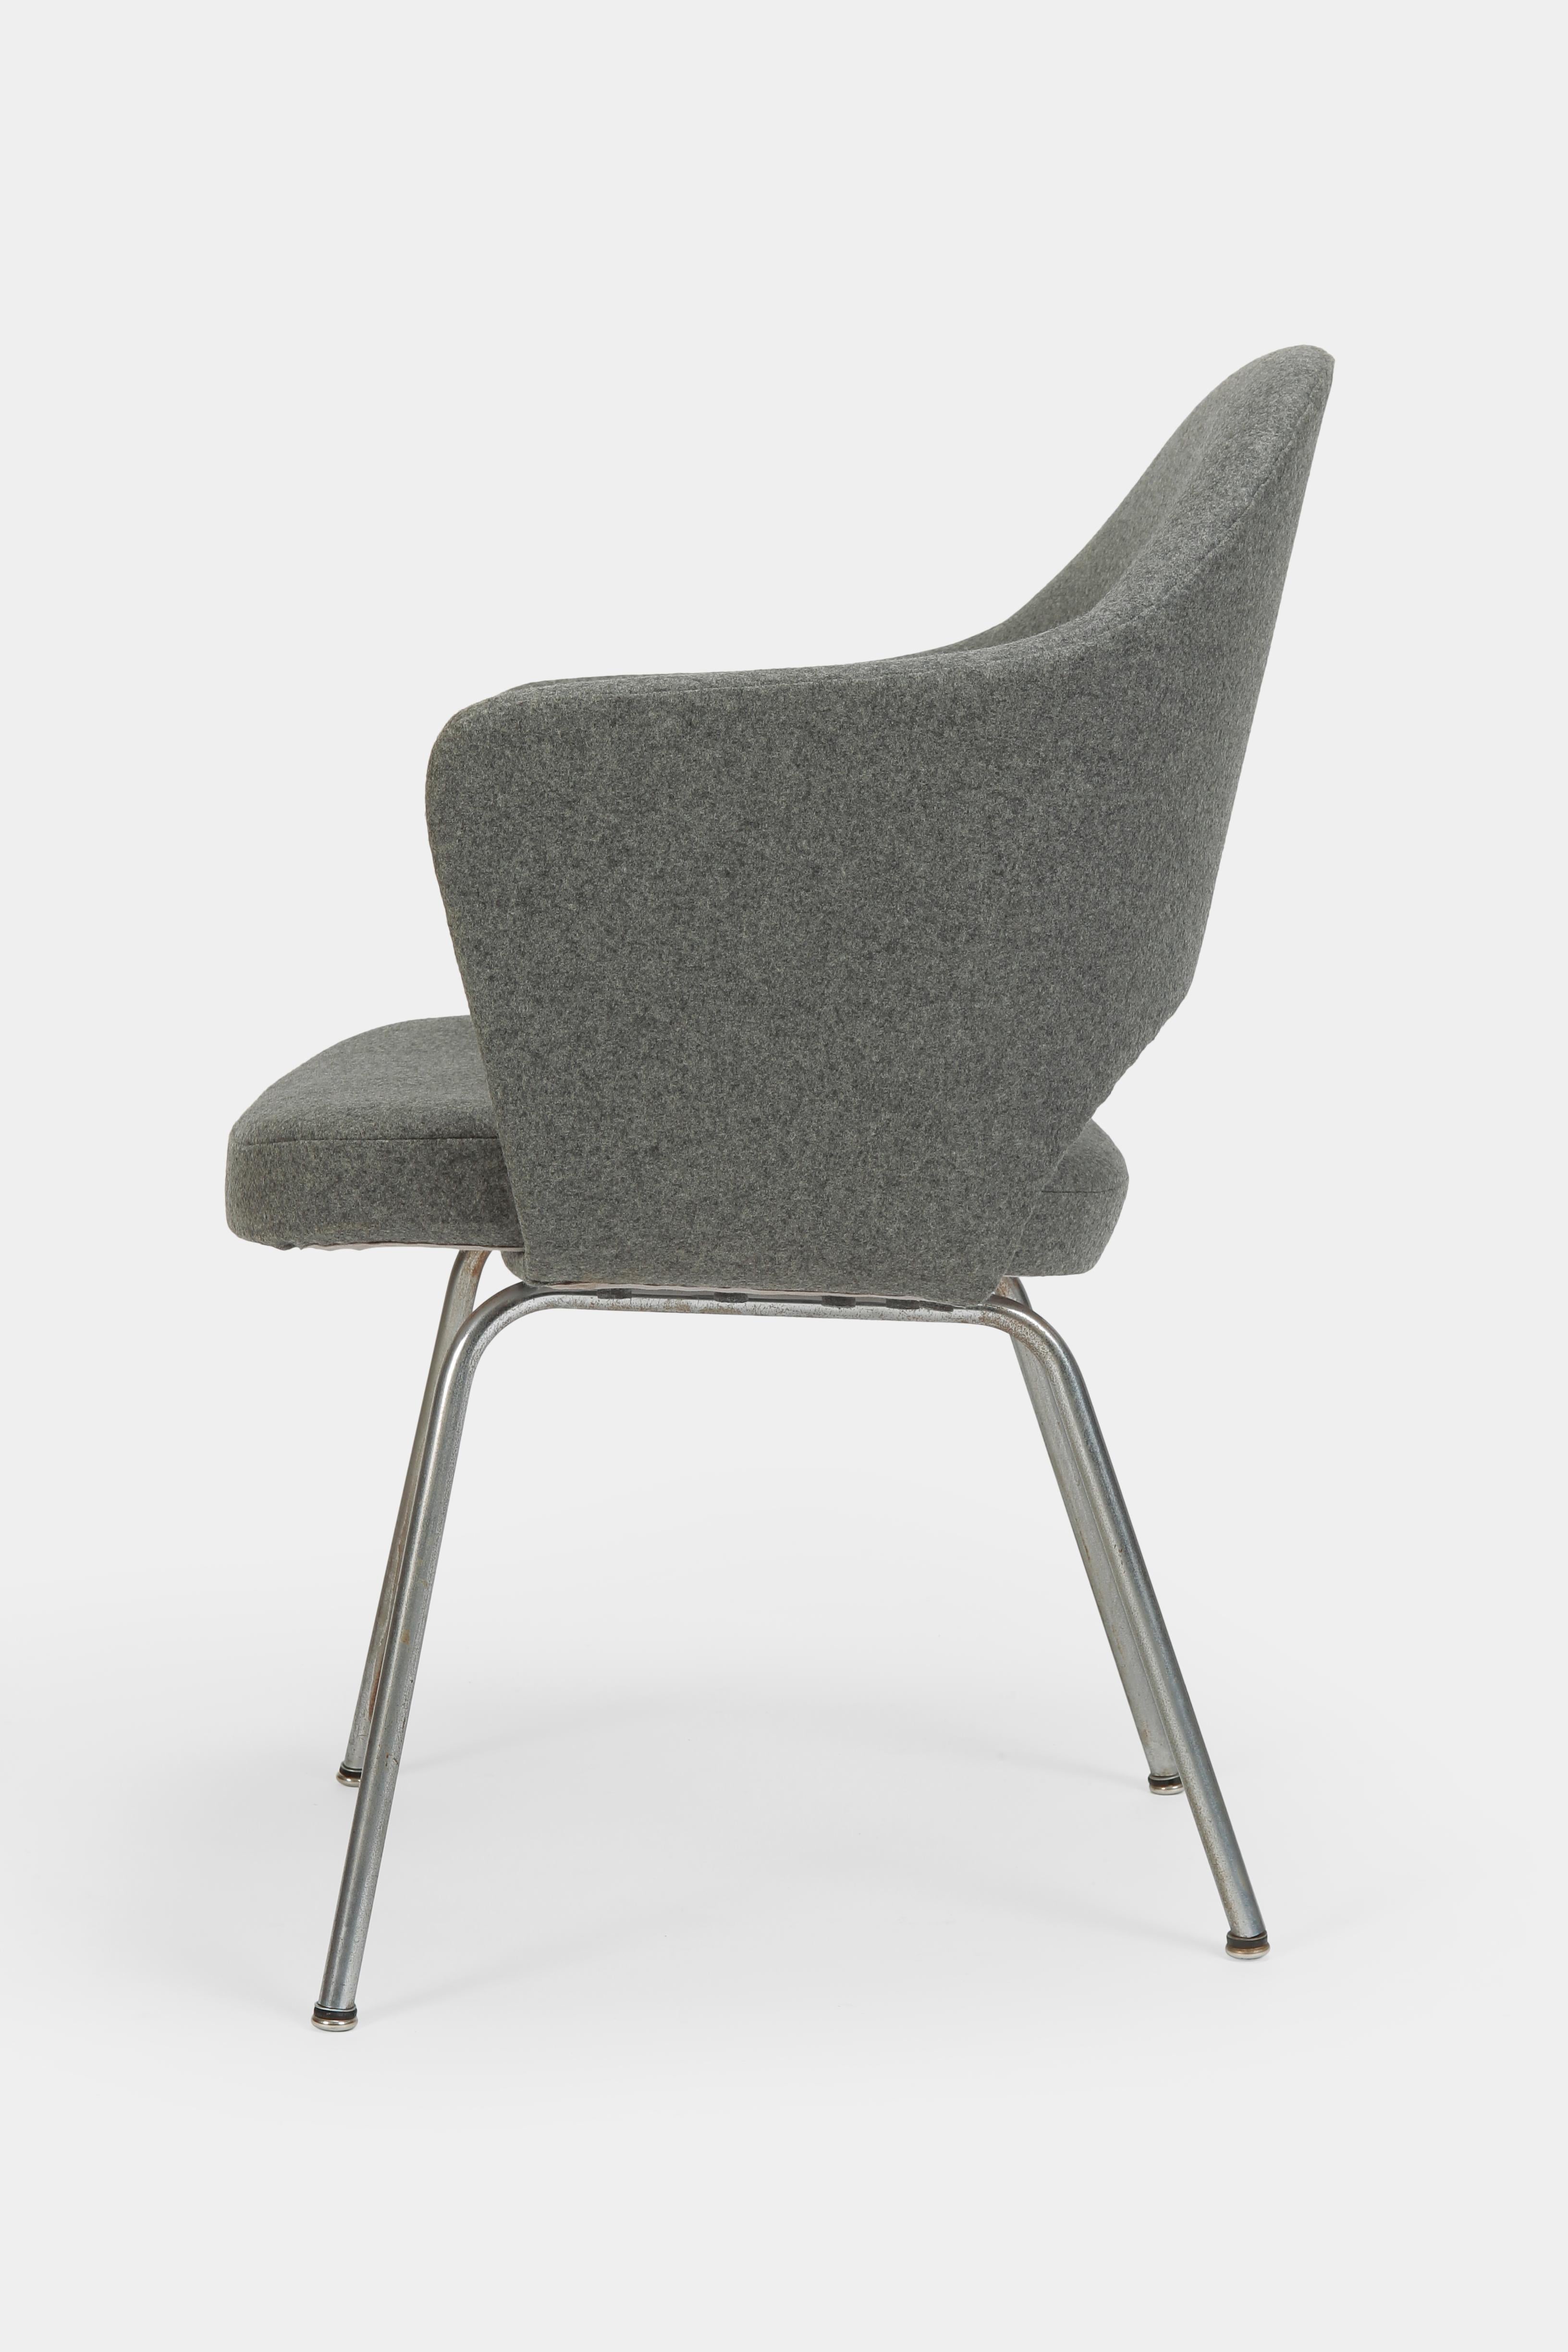 French Eero Saarinen Chair Knoll International, 1960s